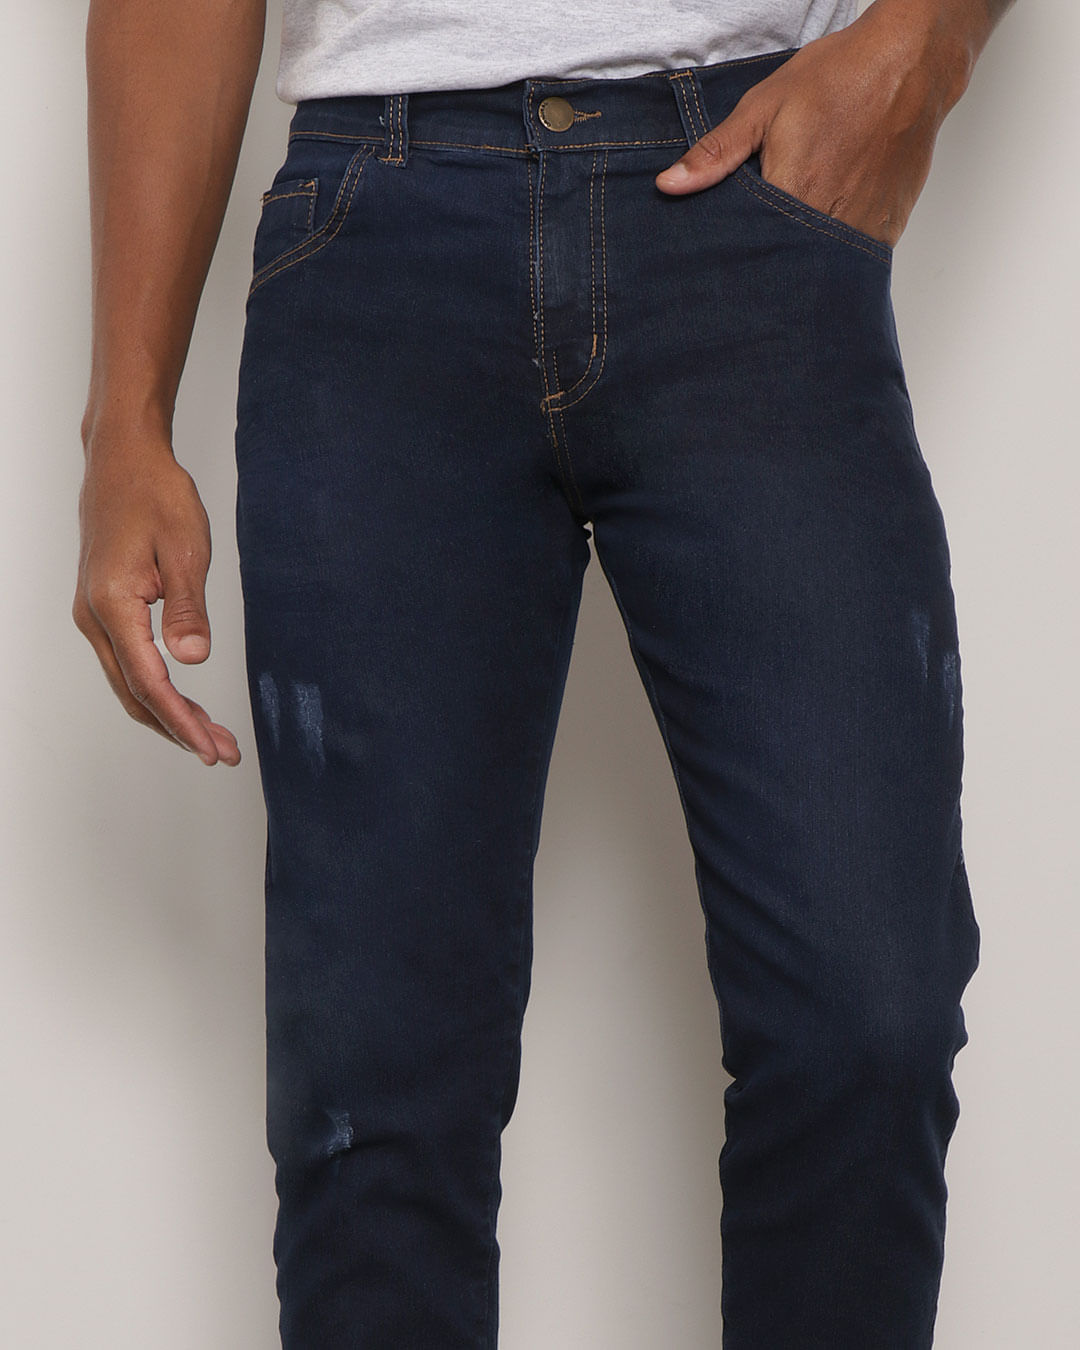 Preços baixos em Calça Jeans Masculina Pelle Pelle